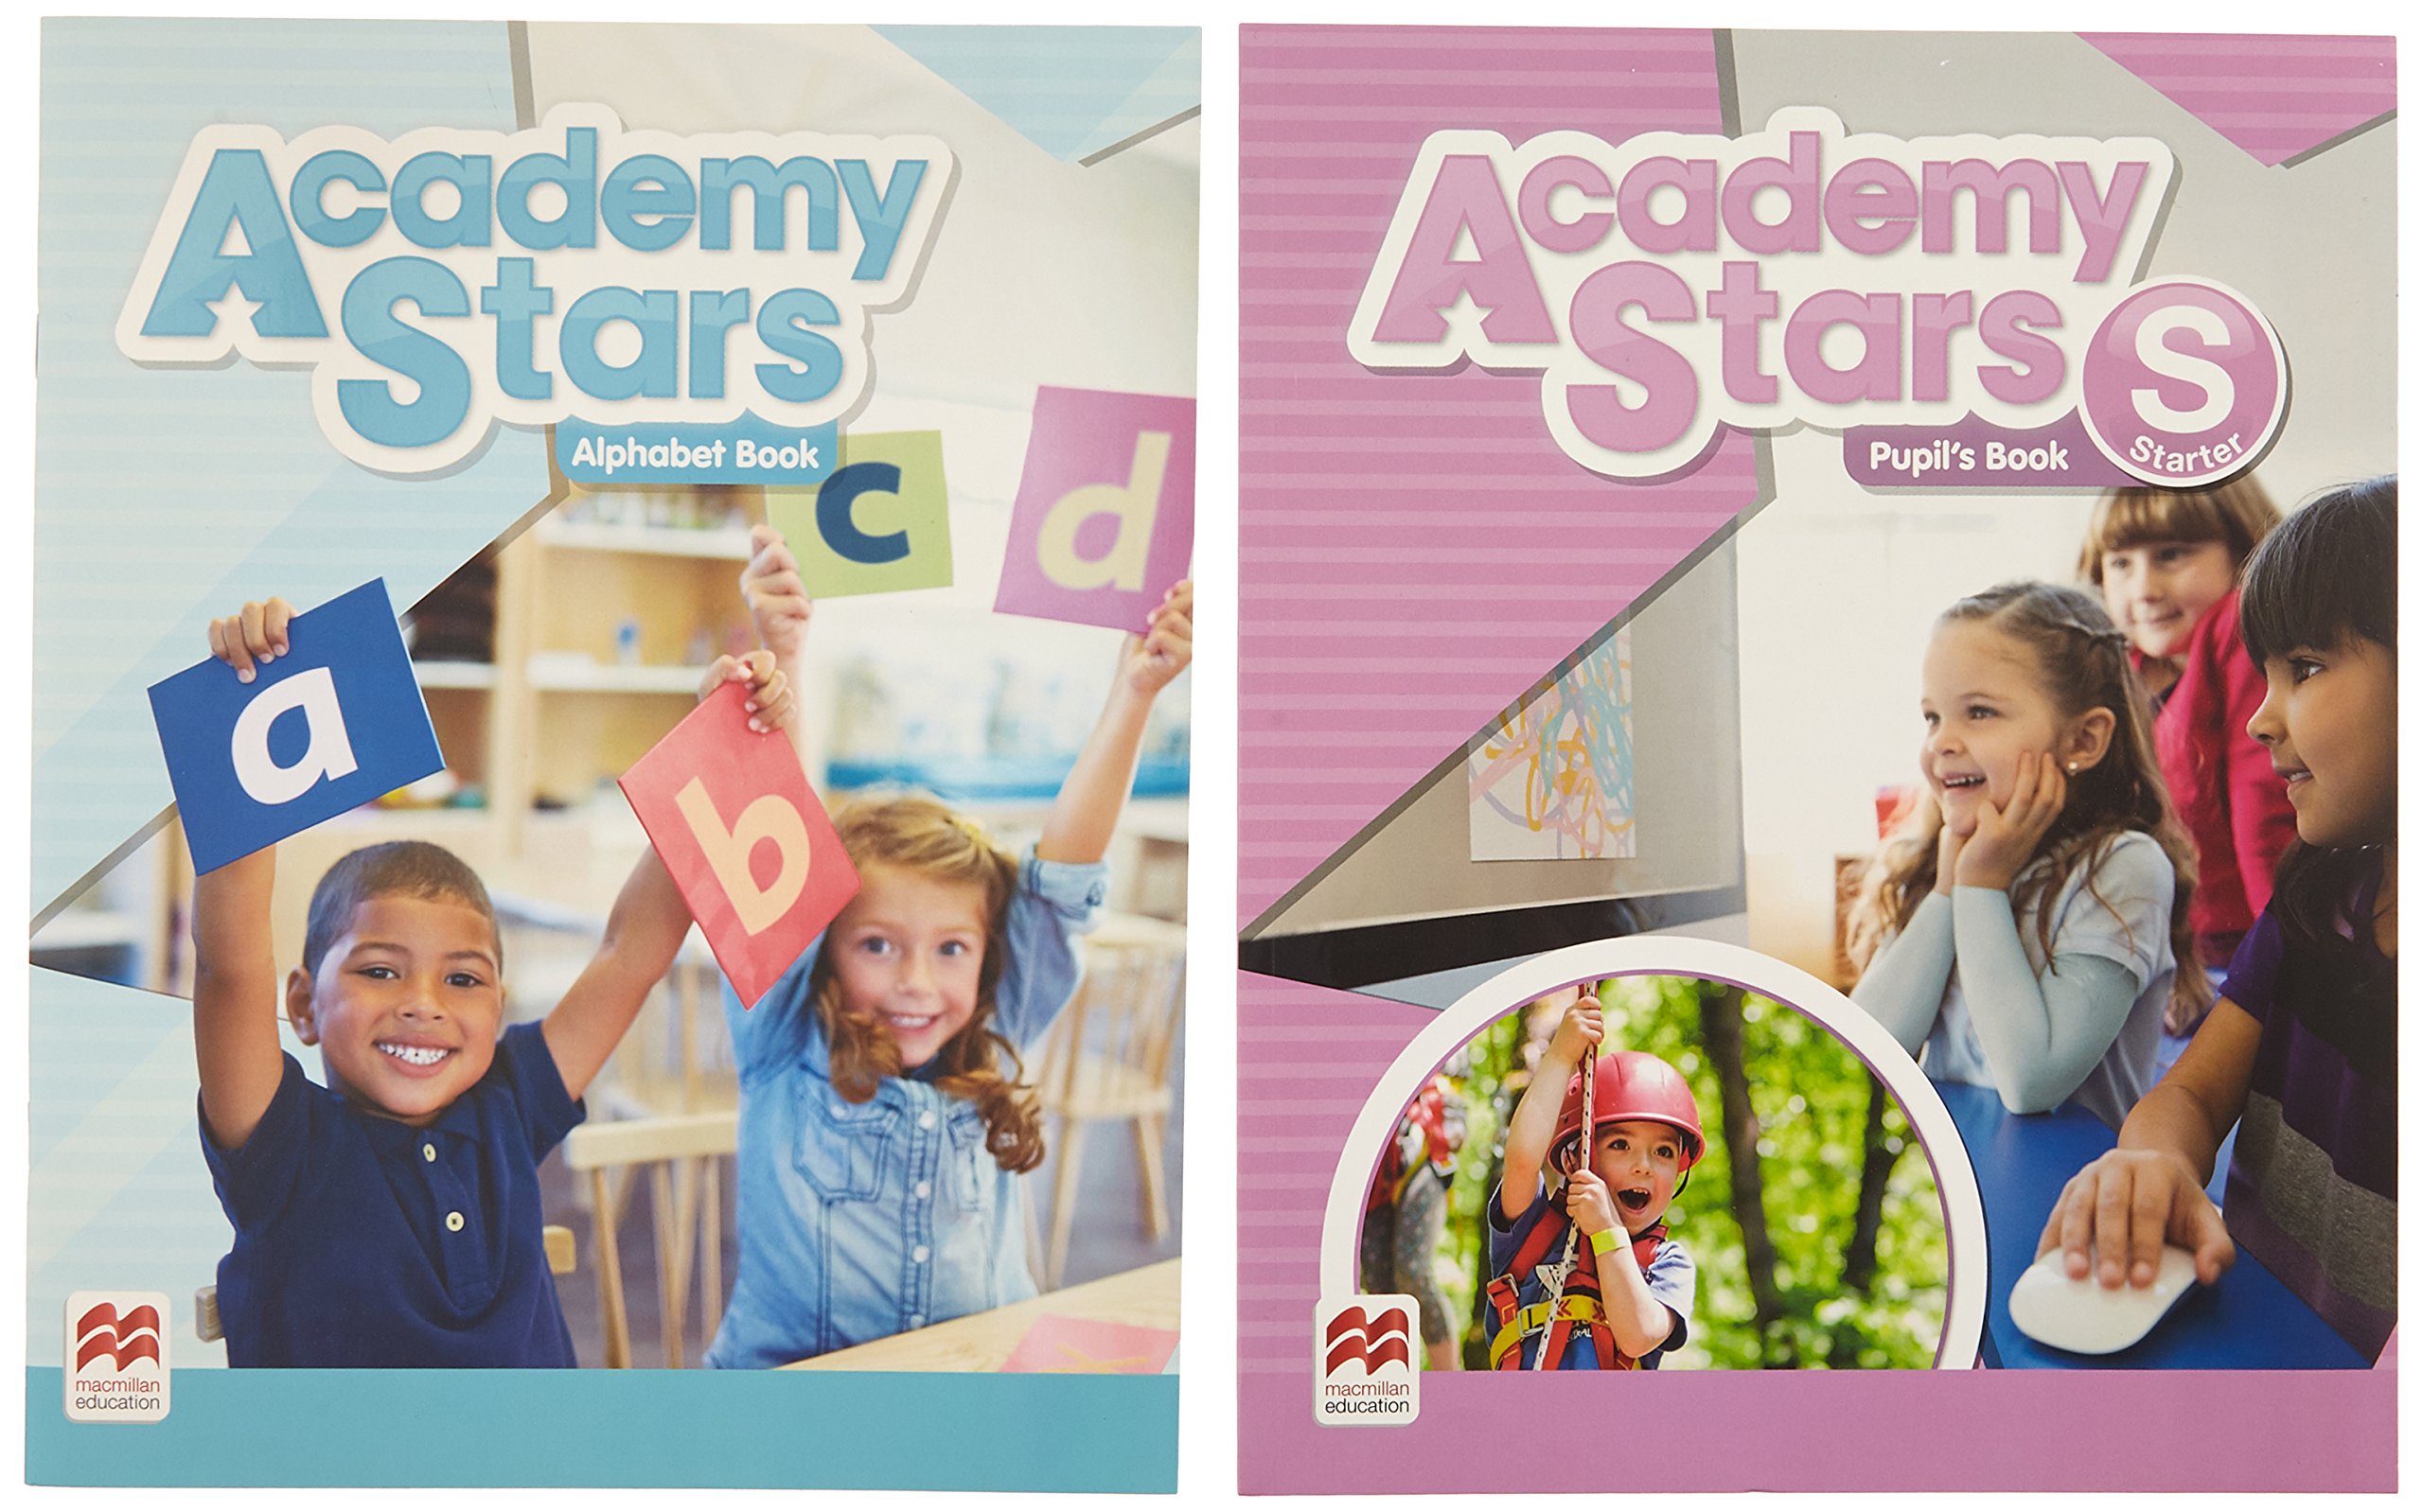 ACADEMY STARS STARTER Pupil's Book with Alphabet Book